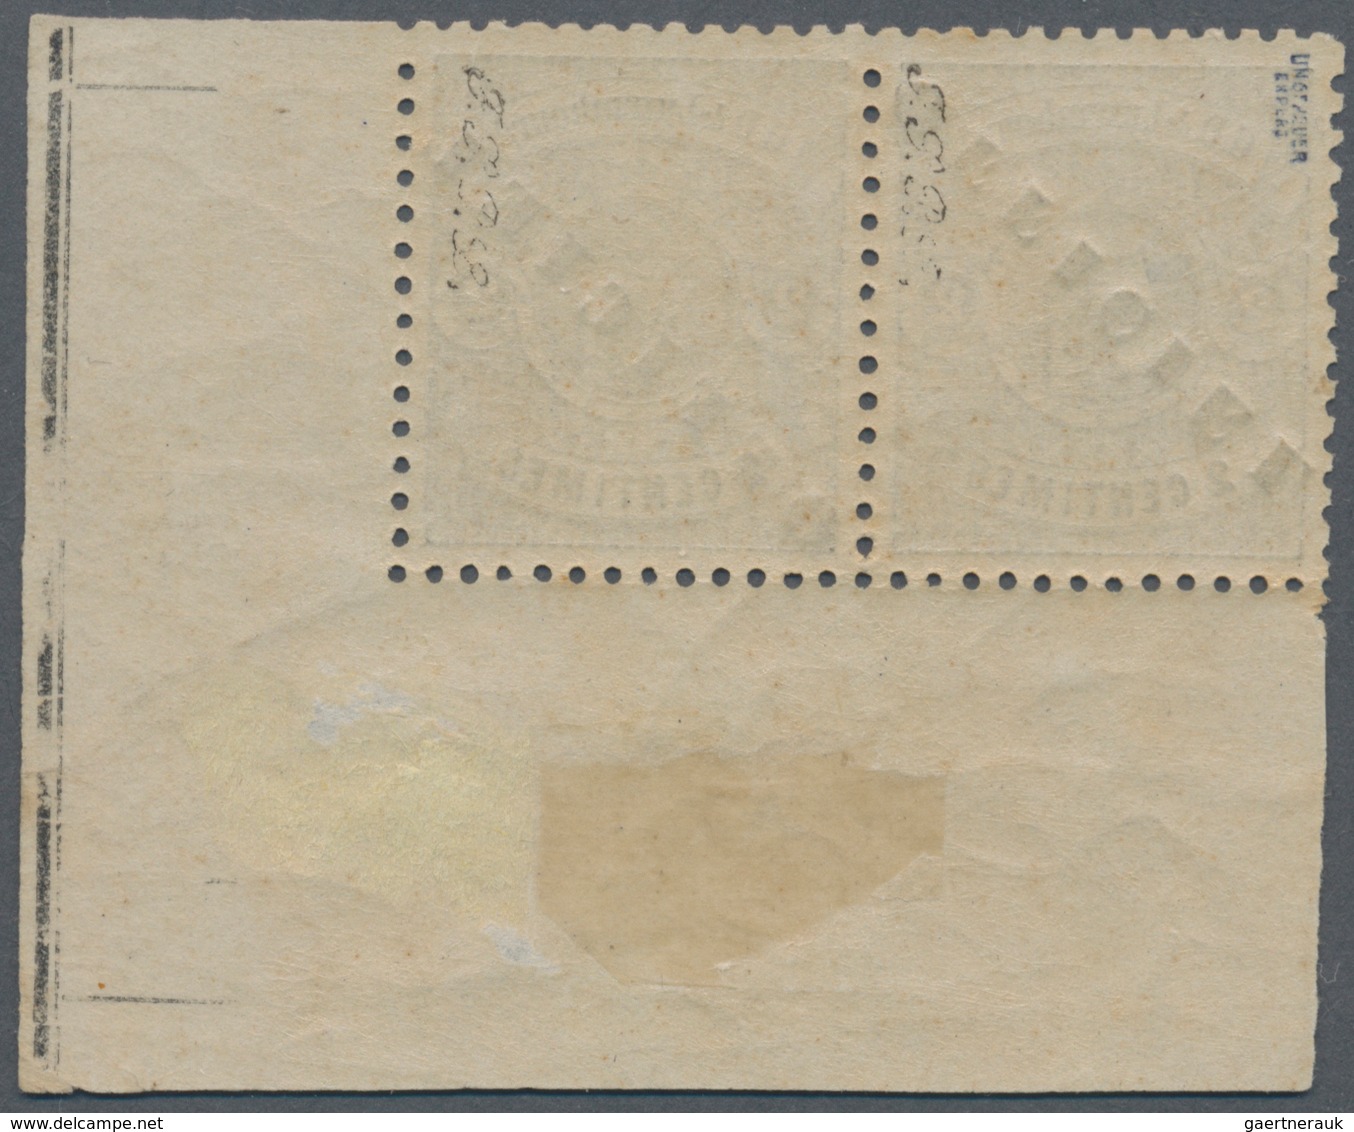 Luxemburg - Dienstmarken: 1875, 2 C. Schwarz Als Waagerechtes Aufdrucktypenpaar Mit Einmal Kopfstehe - Officials